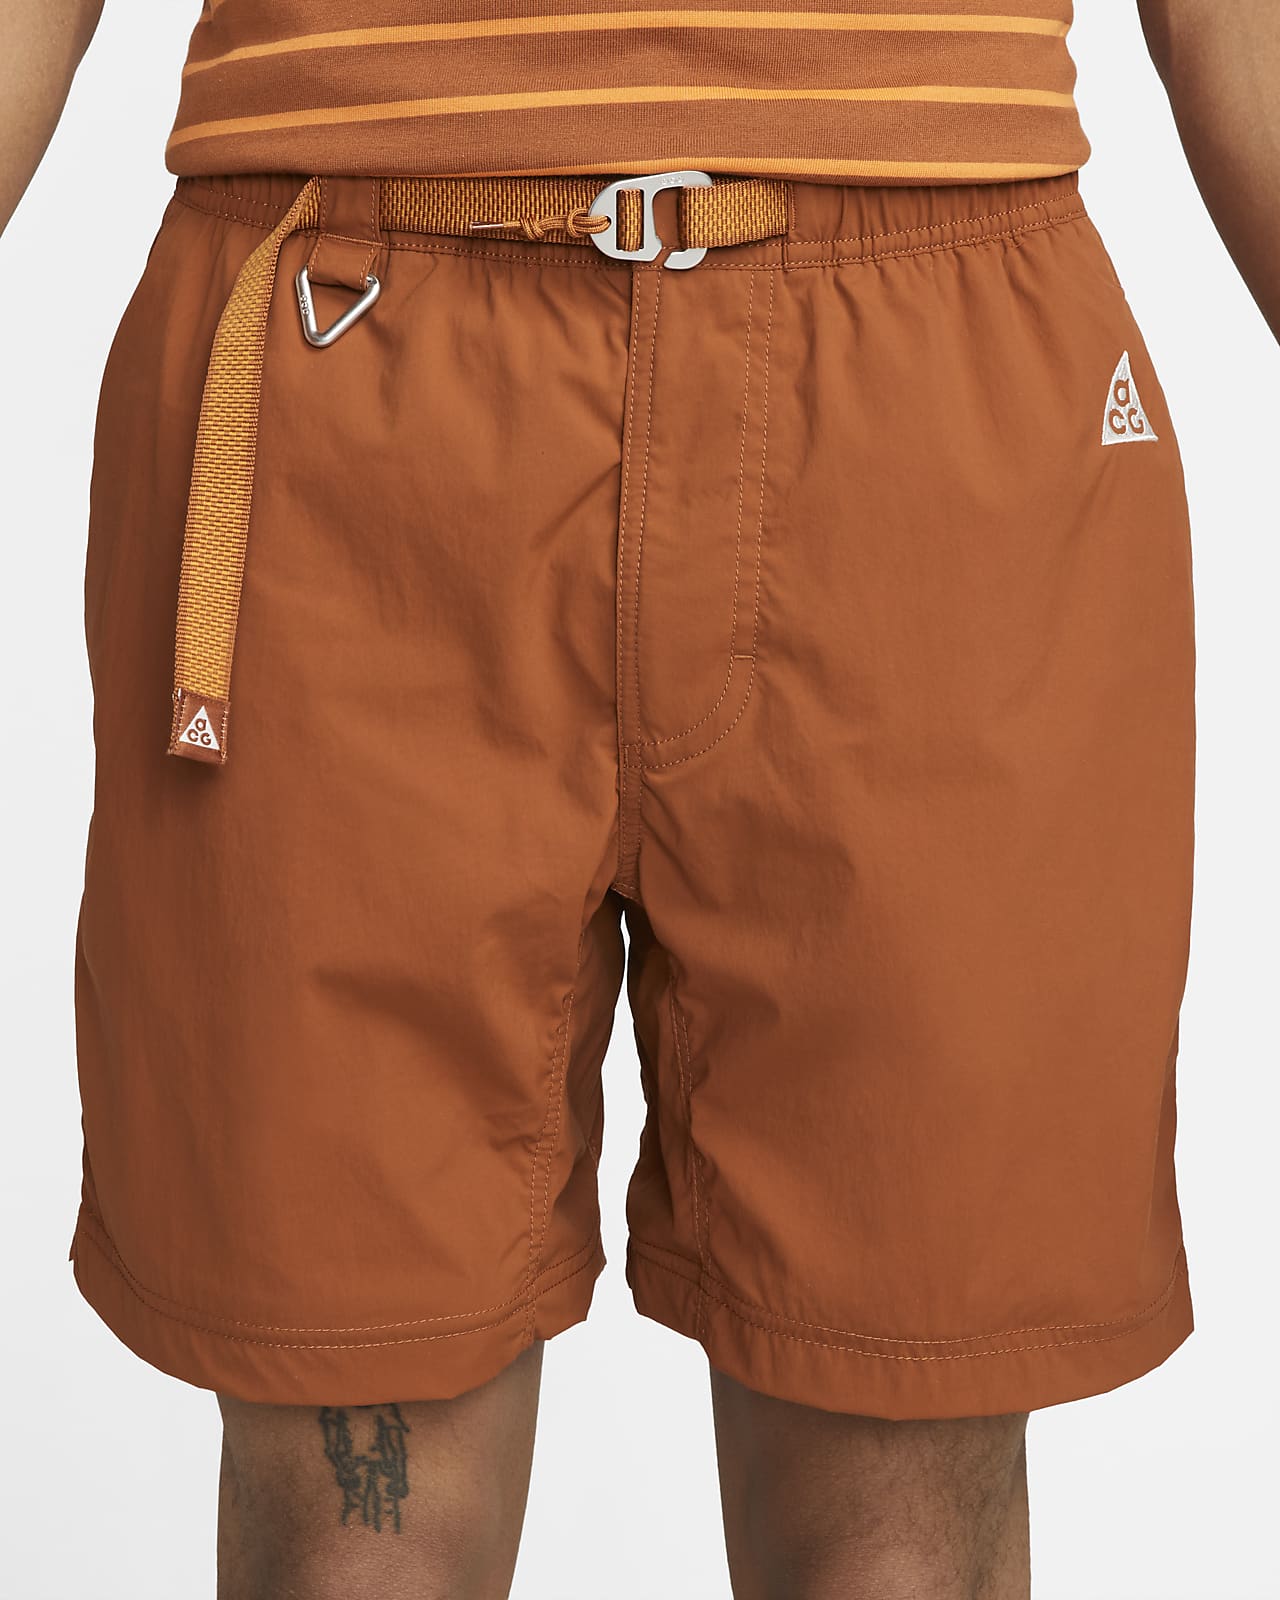 Nike ACG Men's Zip-Off Trail Pants.